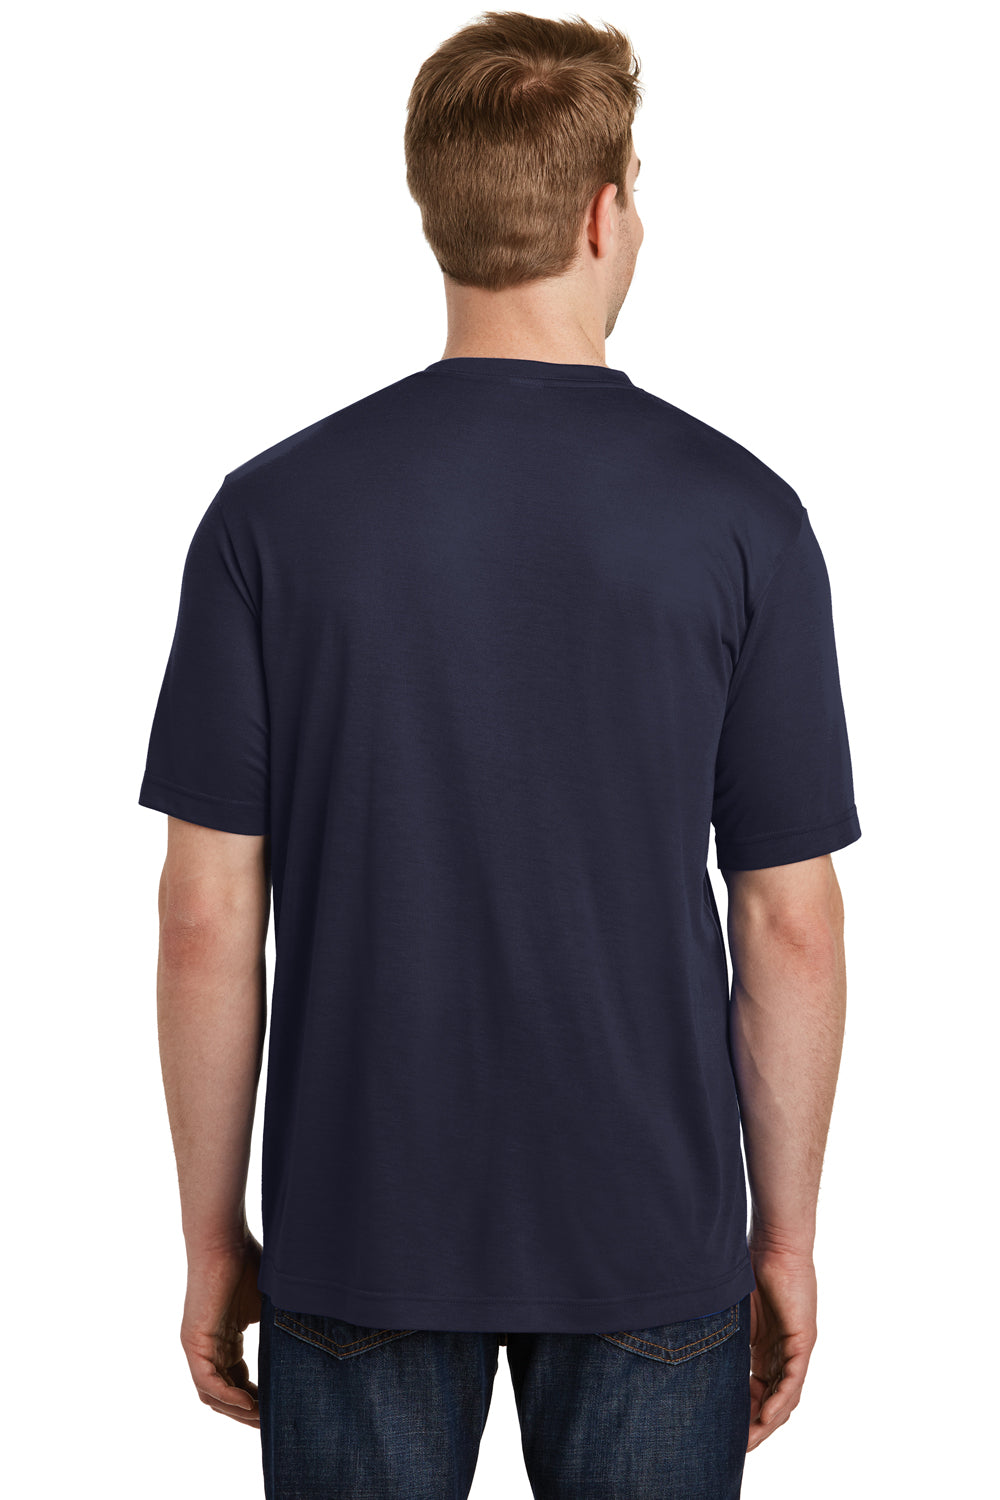 Sport-Tek ST450 Mens Competitor Moisture Wicking Short Sleeve Crewneck T-Shirt Navy Blue Back